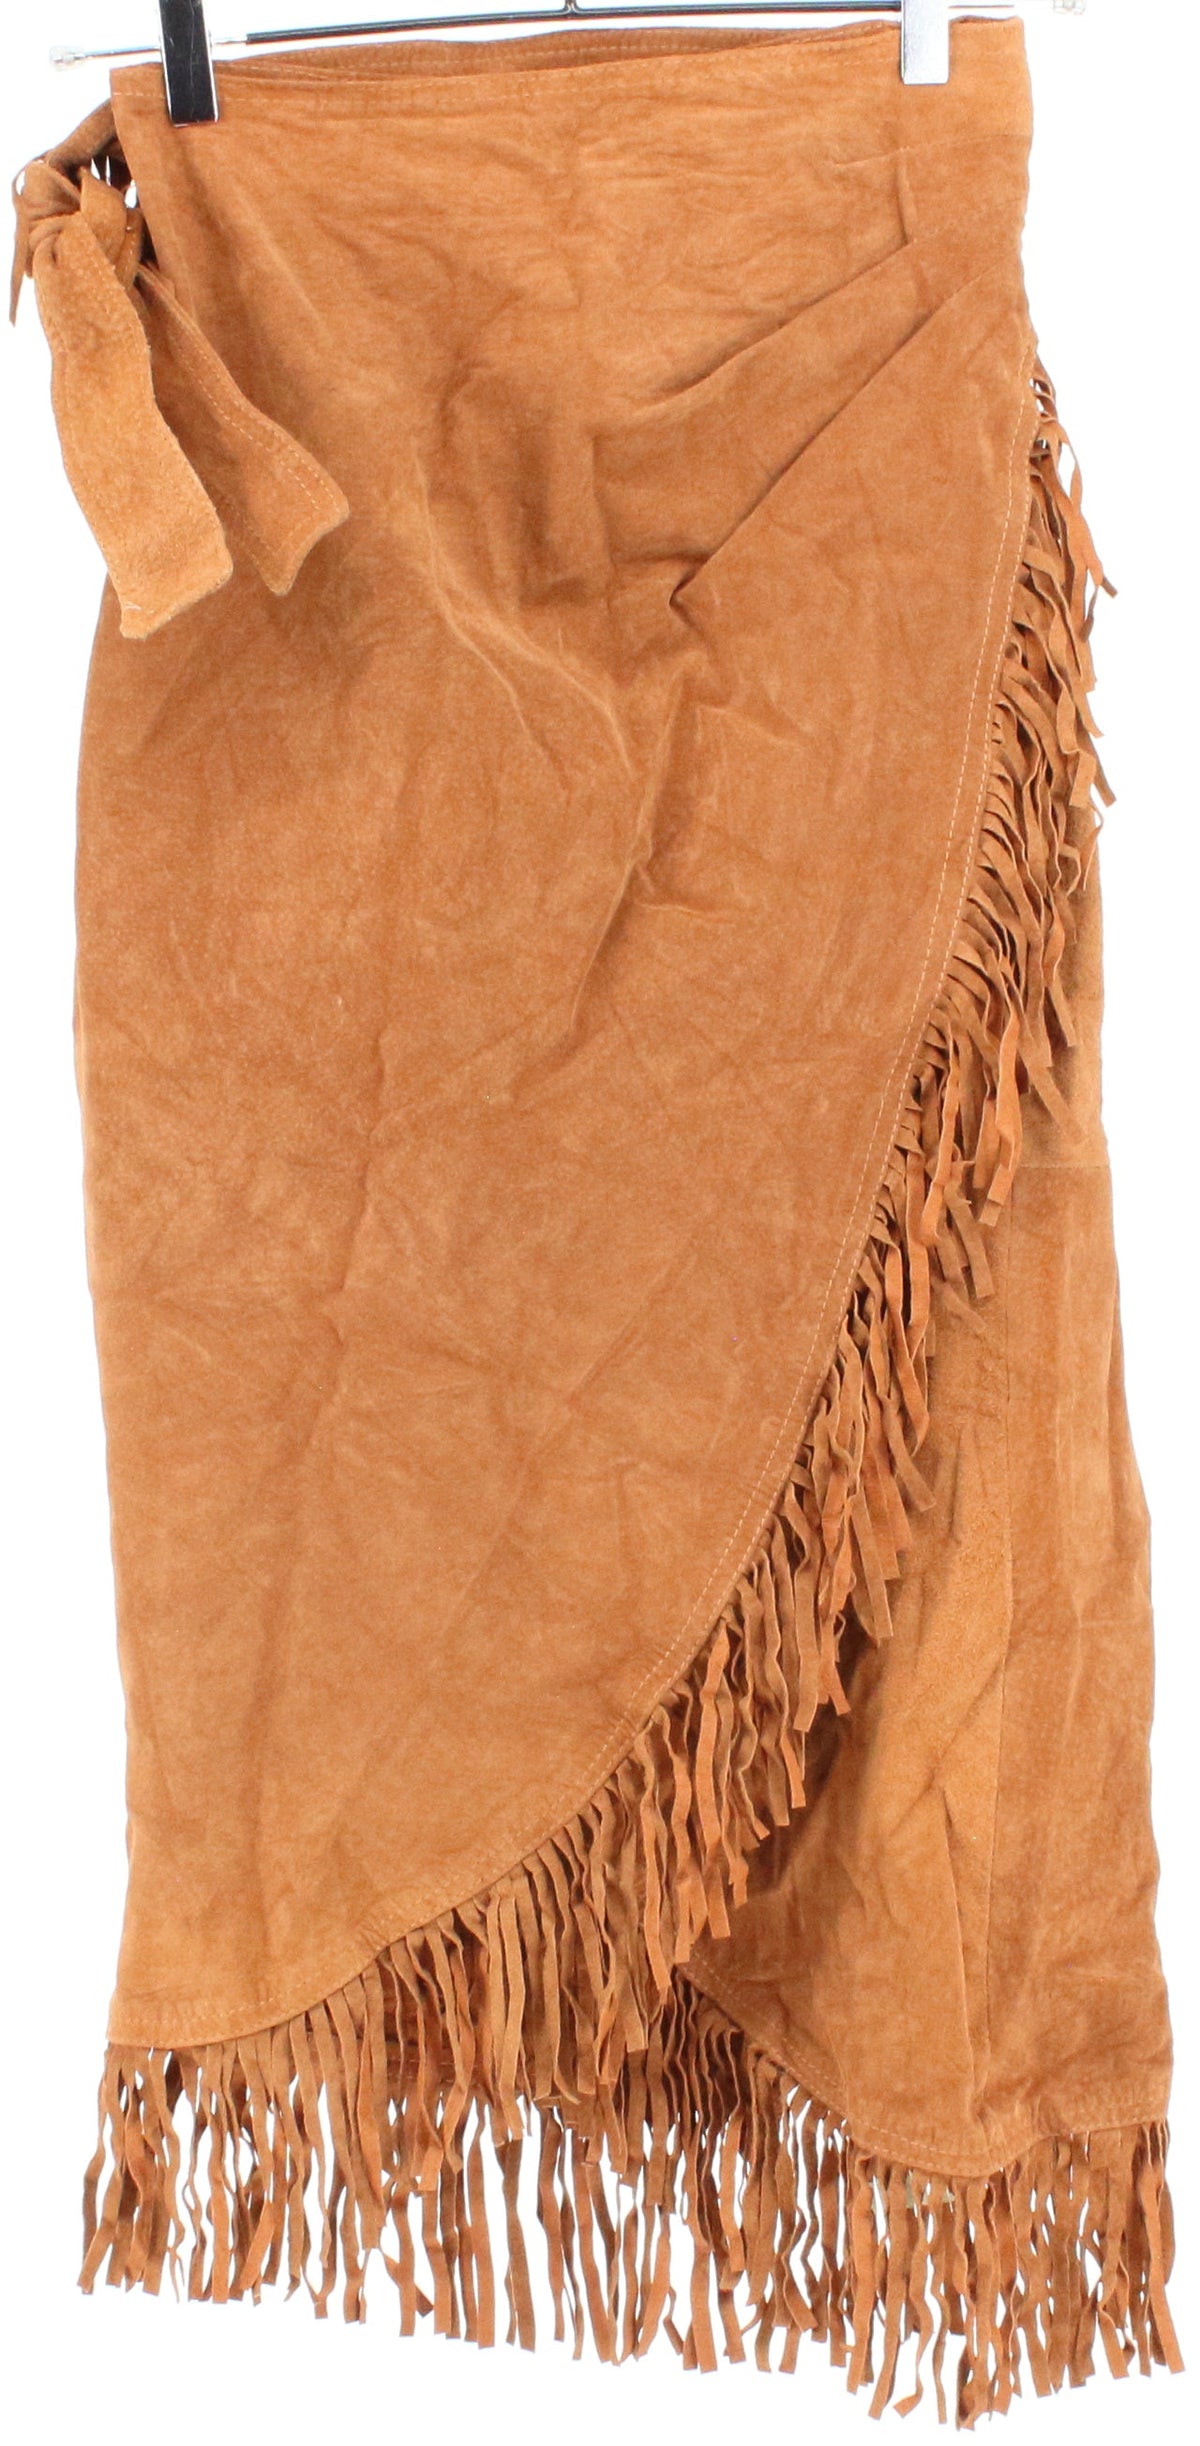 Cedars Camel Fringes Wrap Leather Skirt